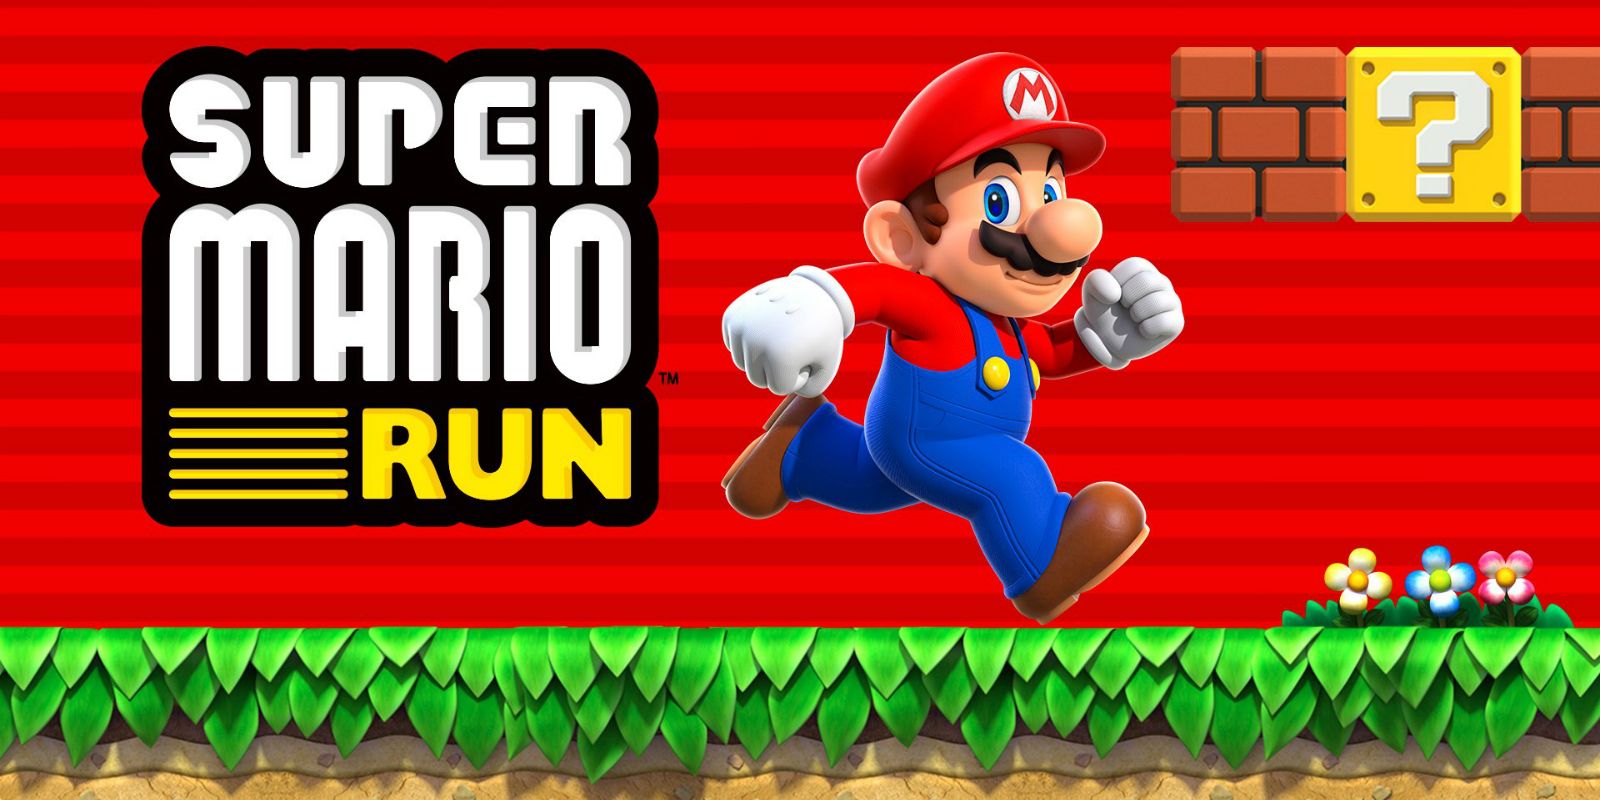 Super Mario Run coming to iPad and iPhone